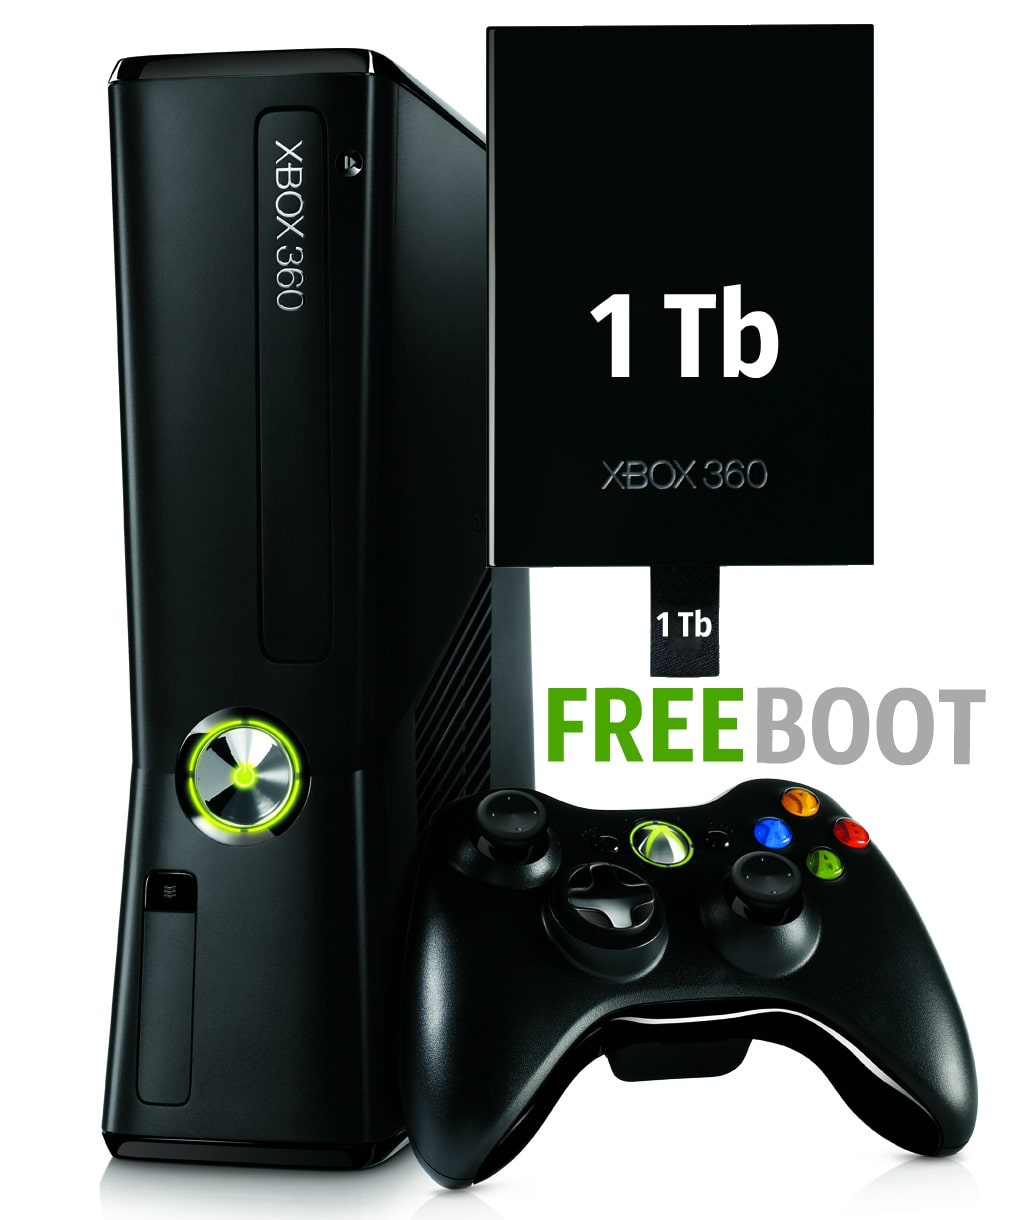 Xbox 360 Slim 1 Tb Freeboot (550 игр на HDD)